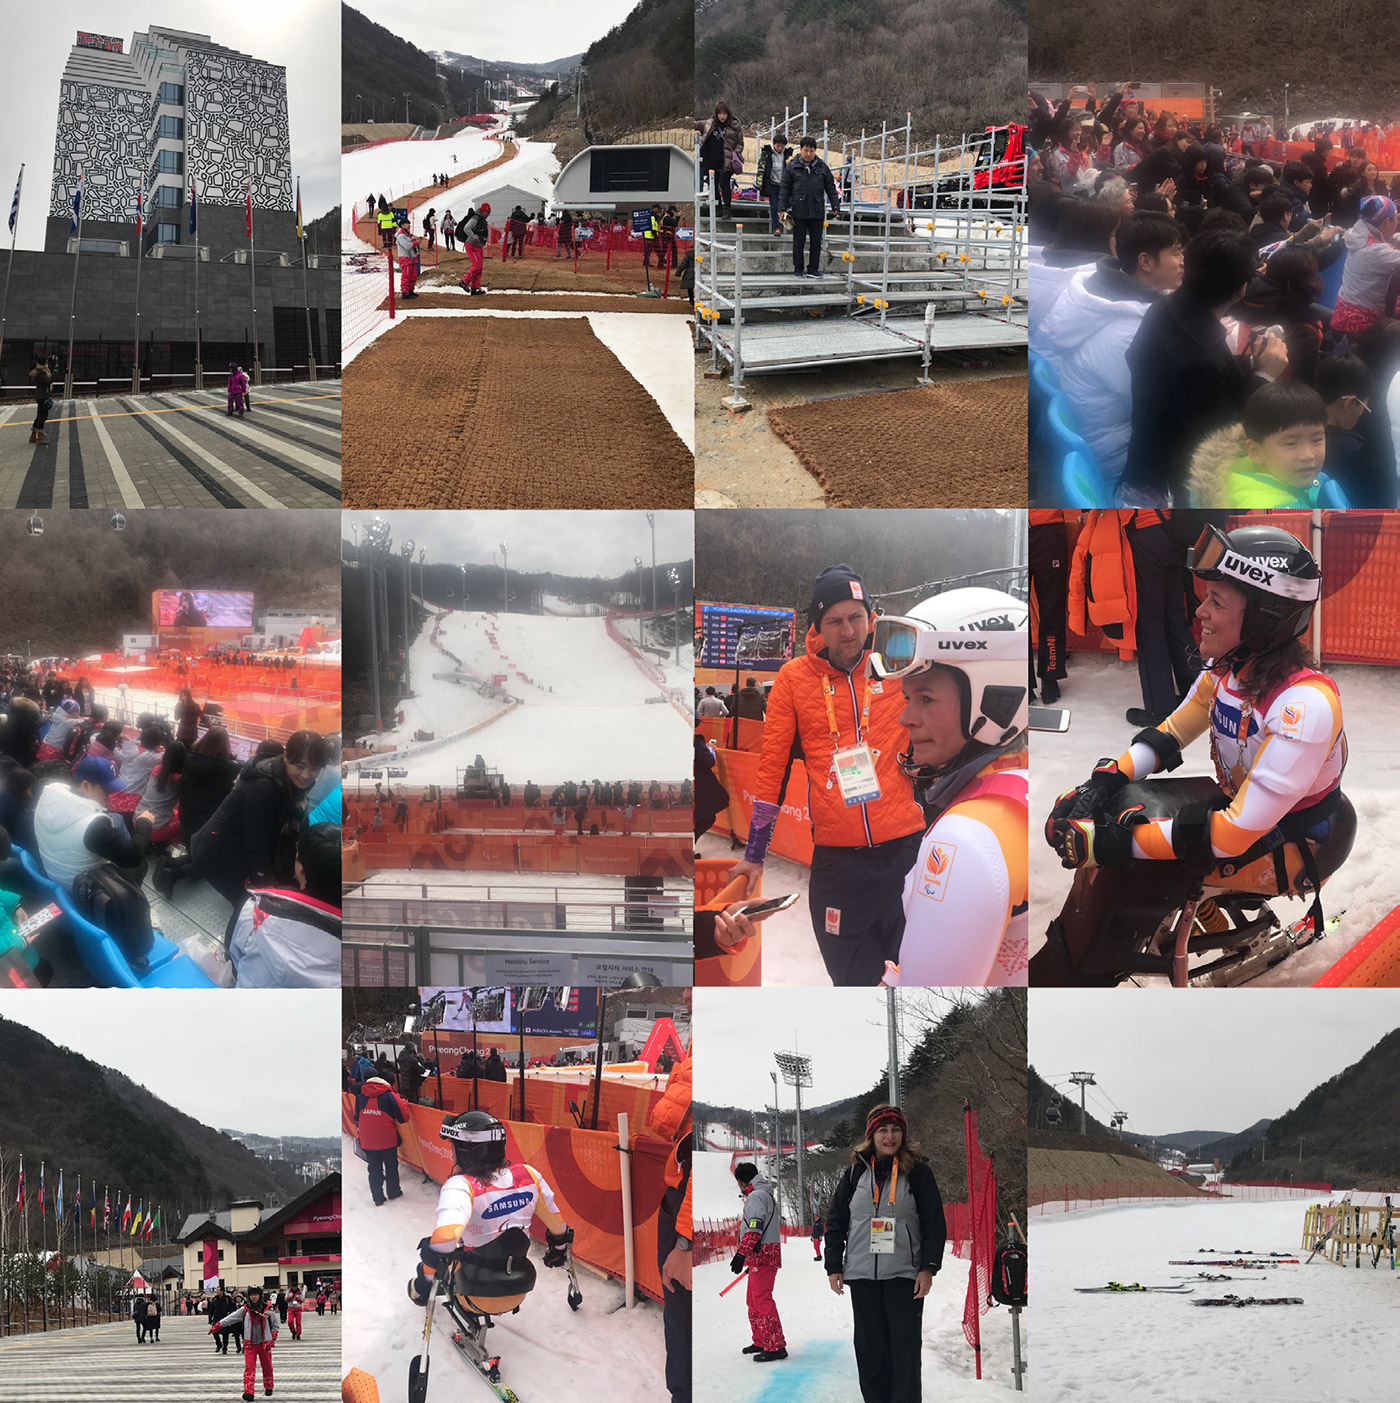 PyeongChang Paralympics 2018 Photo Montage 4 - Alpine Village